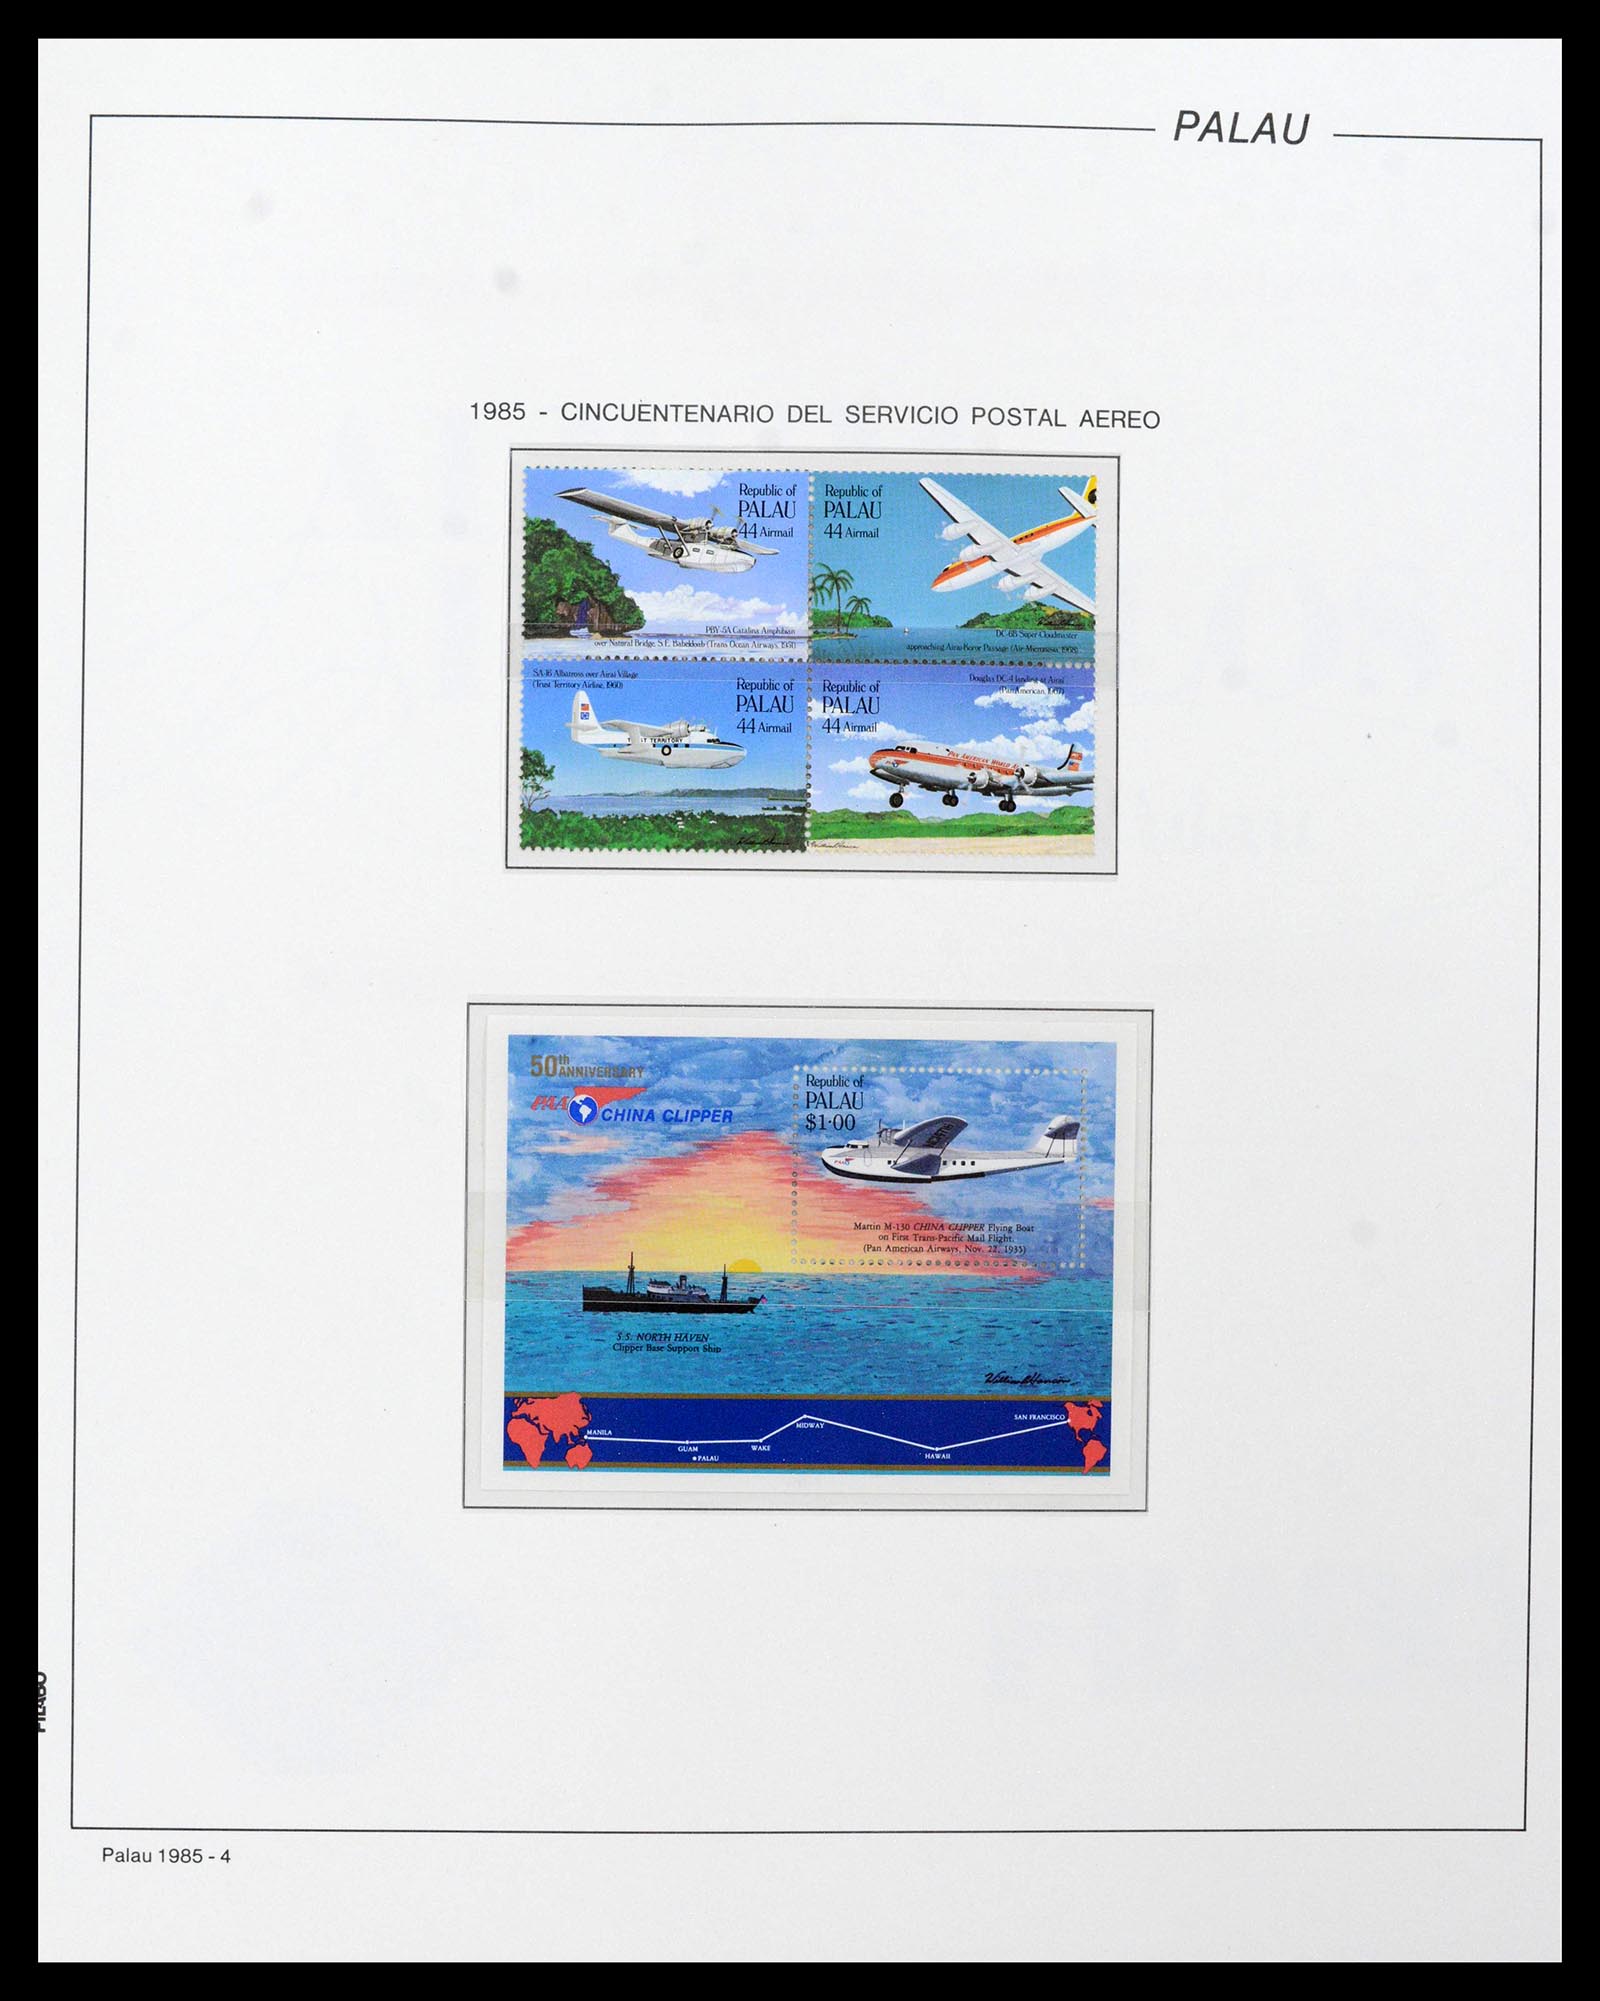 39222 0009 - Stamp collection 39222 Palau, Micronesia and Marshall islands 1980-1995.